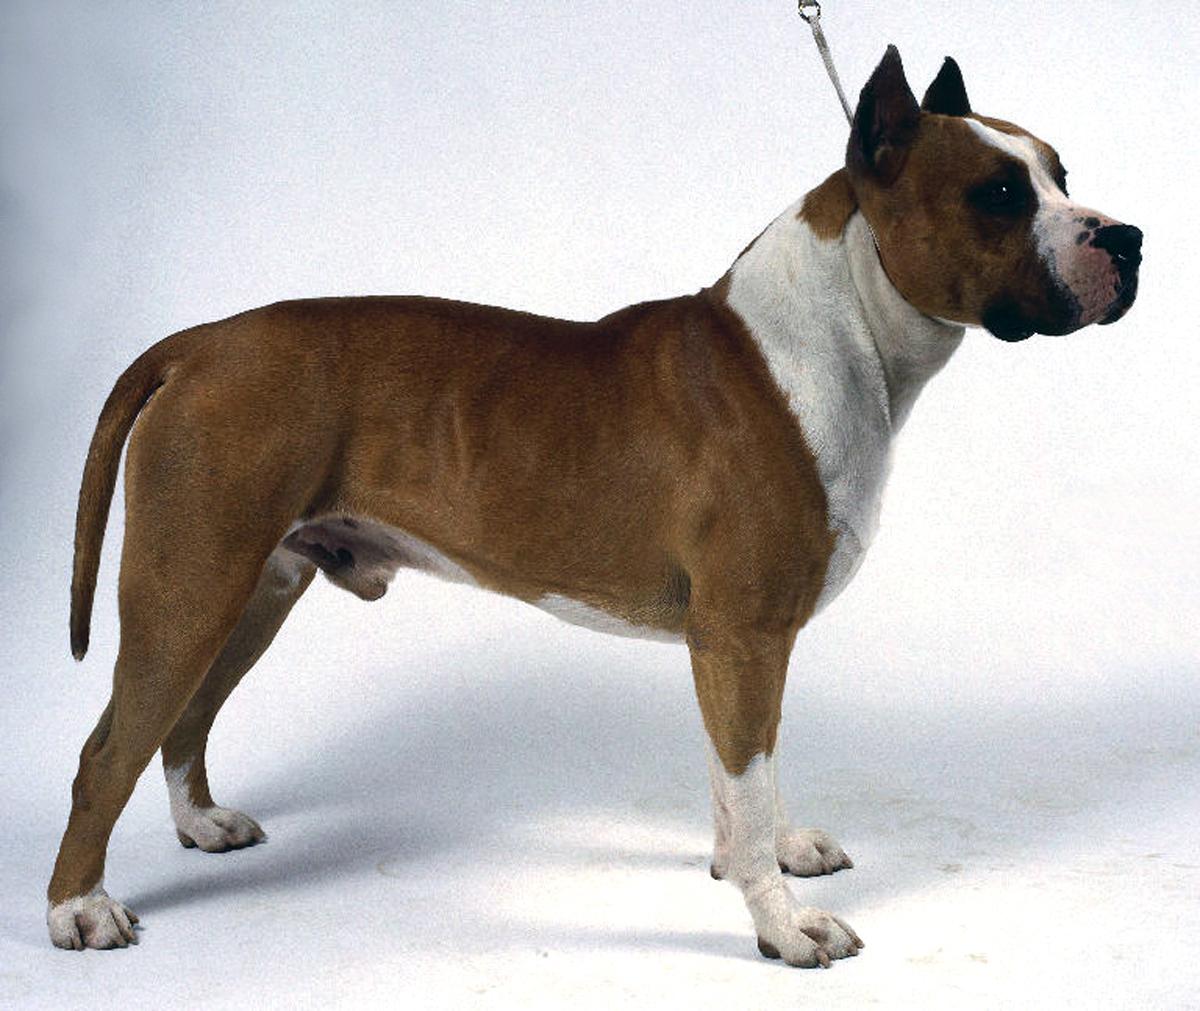 Bull and Terrier Dog: Bull Bull And Terrier Dog In Rack Breed